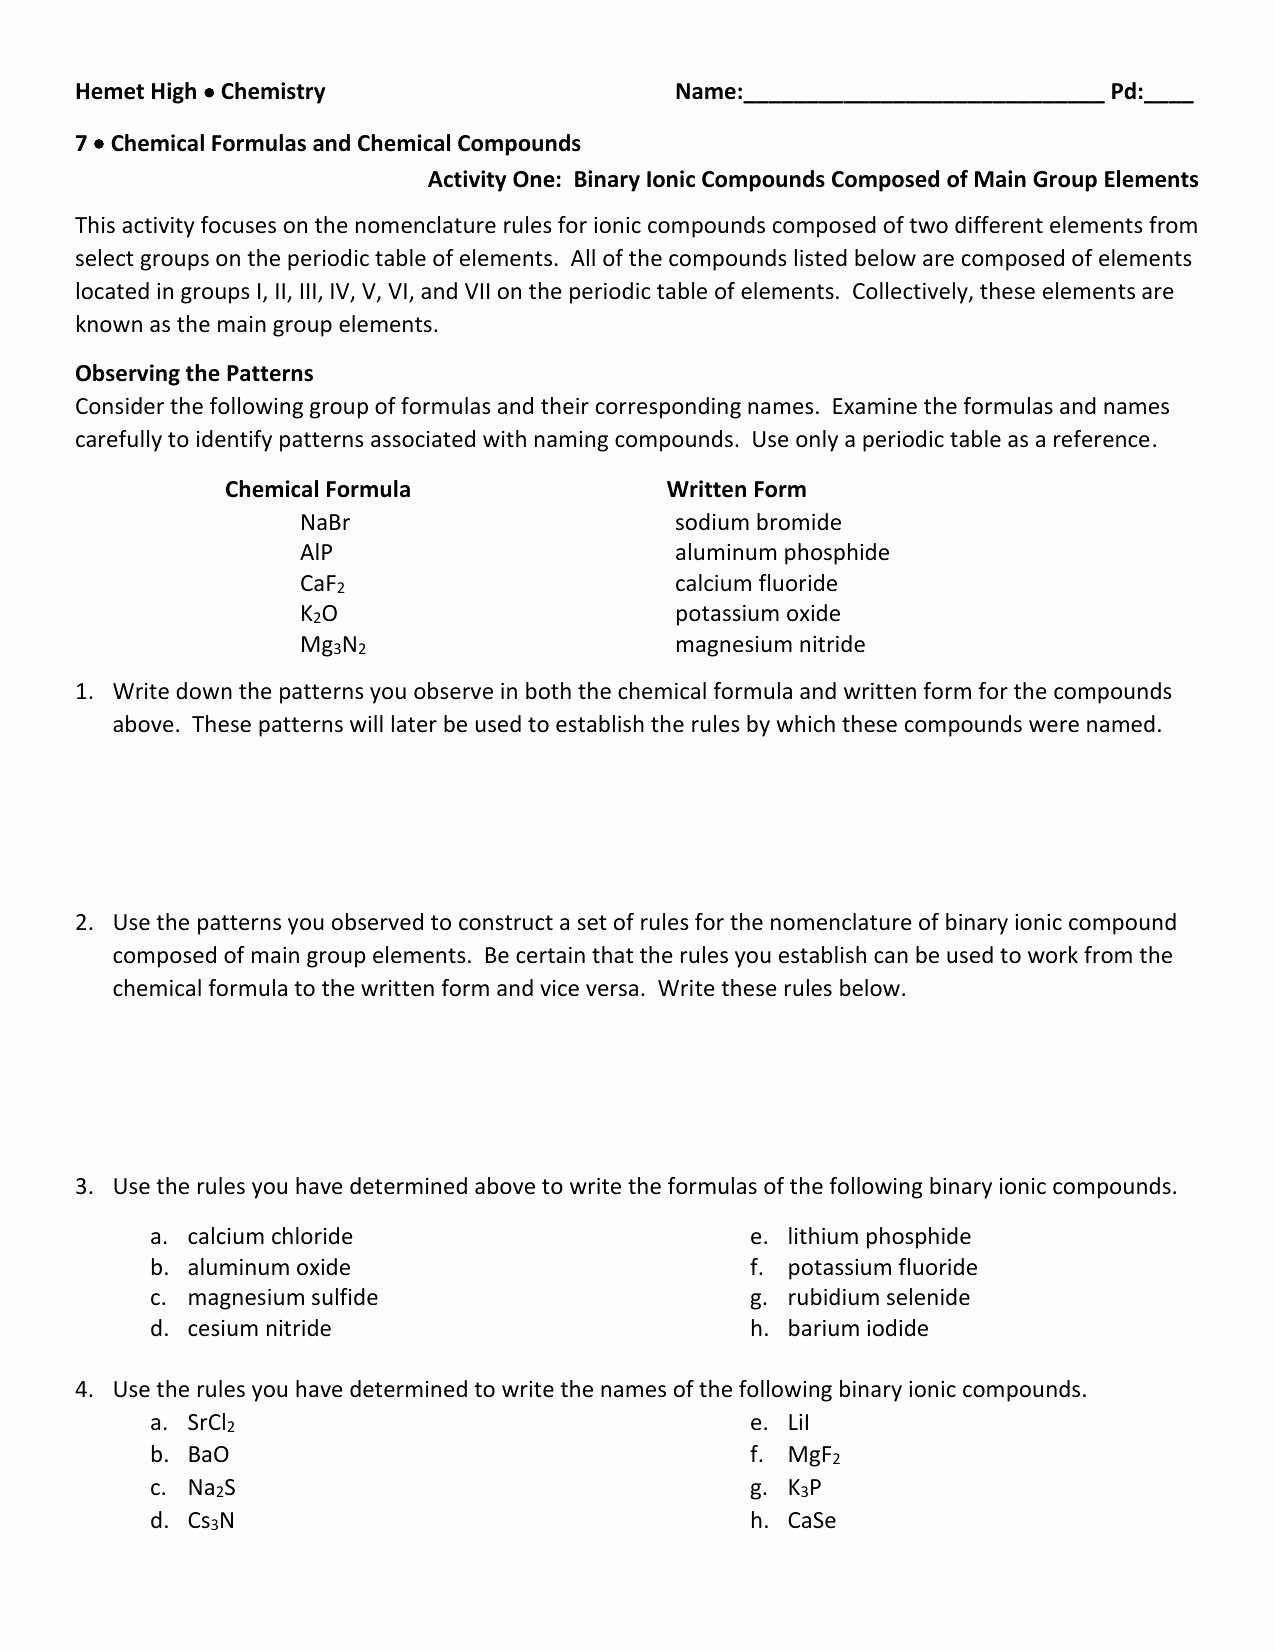 Chemical formula Worksheet Answers New Chemical Names and formulas Worksheet Answers